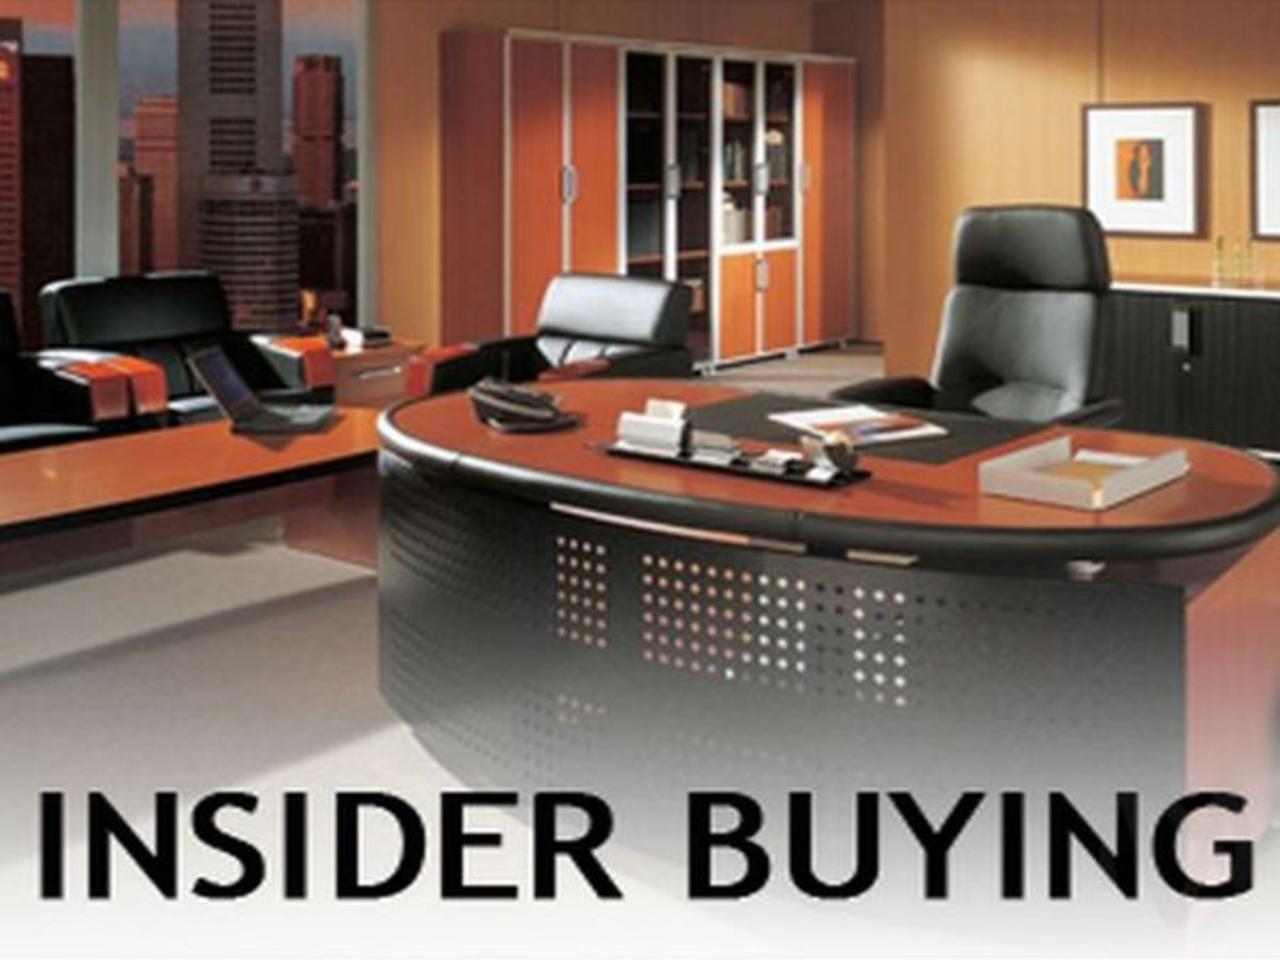 Thursday 12/2 Insider Buying Report: CLF, CHGG